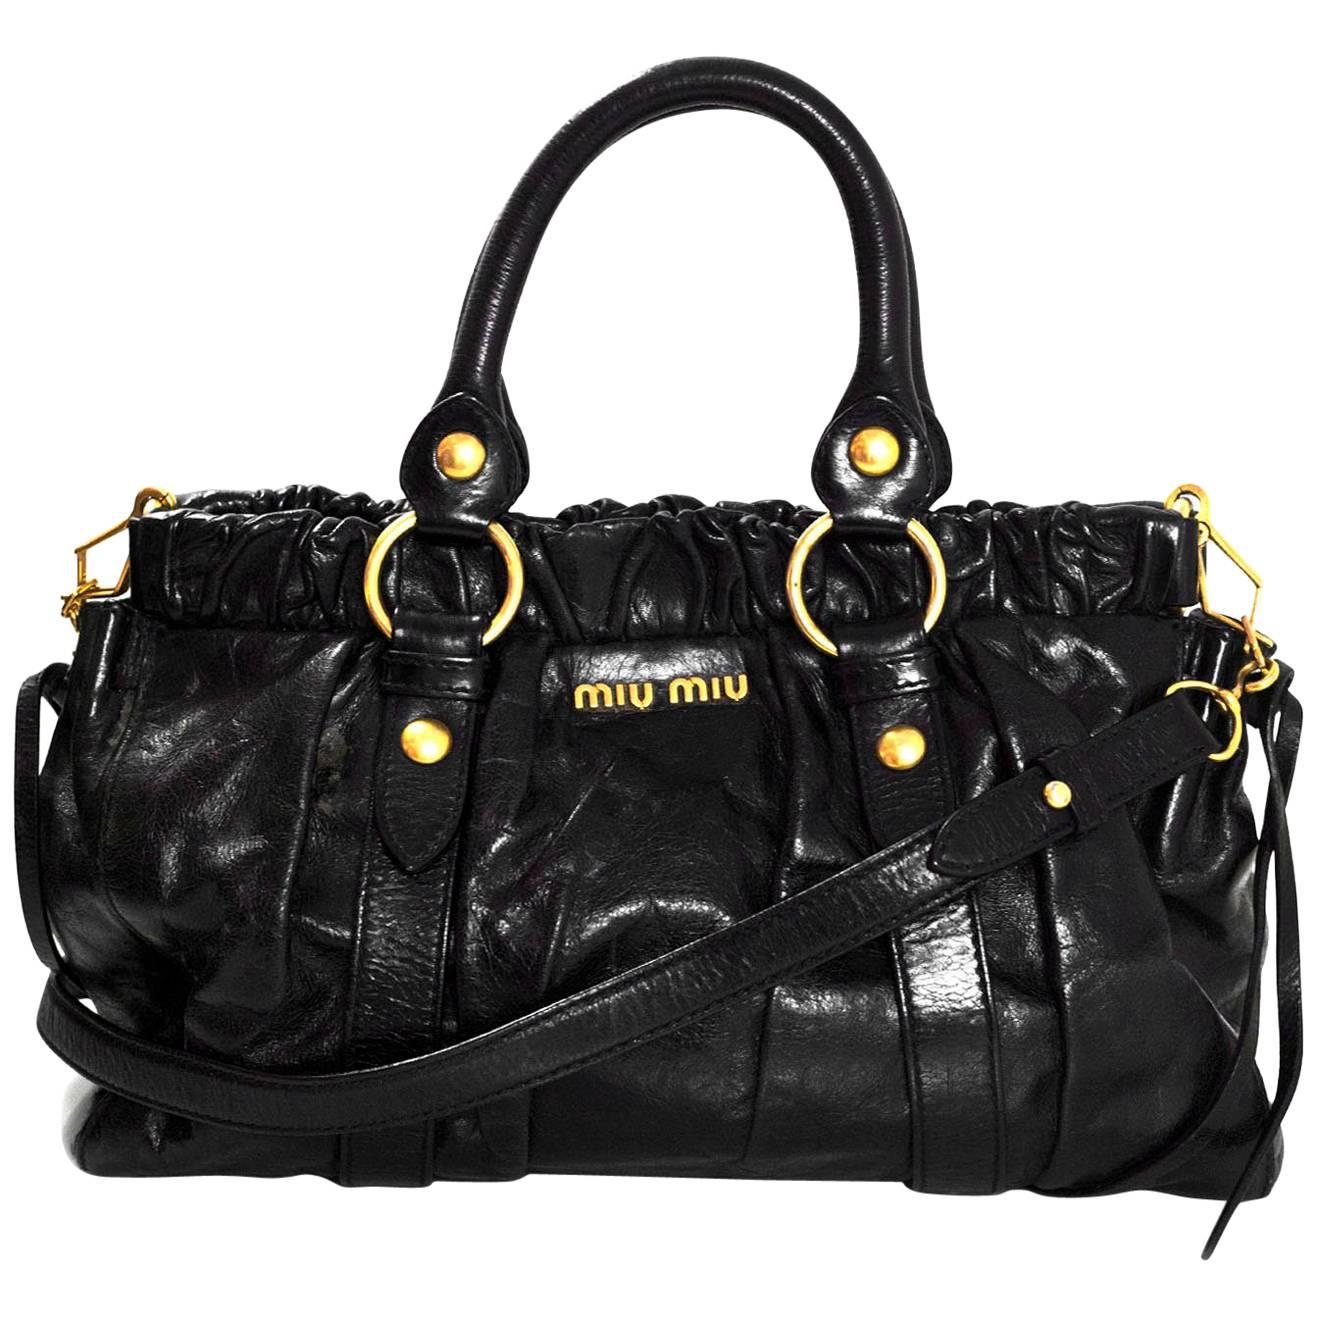 Miu Miu Black Ruched Leather Satchel Bag with DB